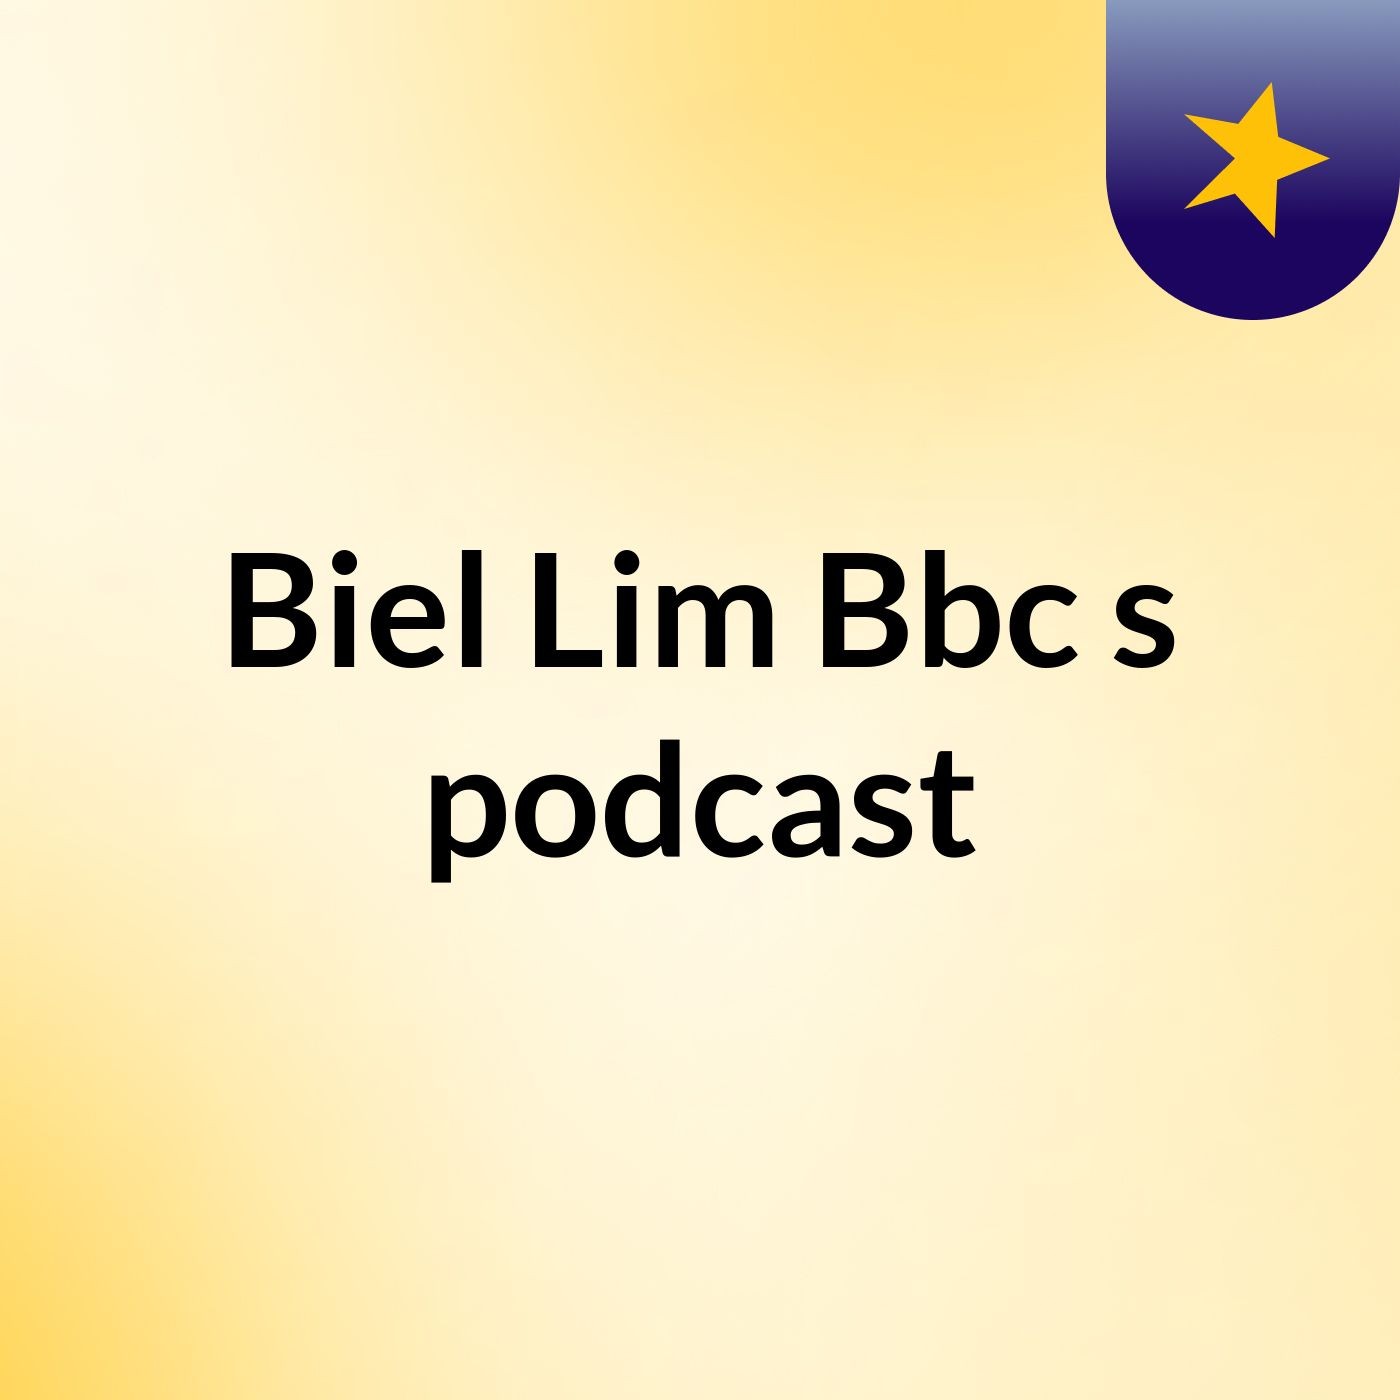 Biel Lim Bbc's podcast